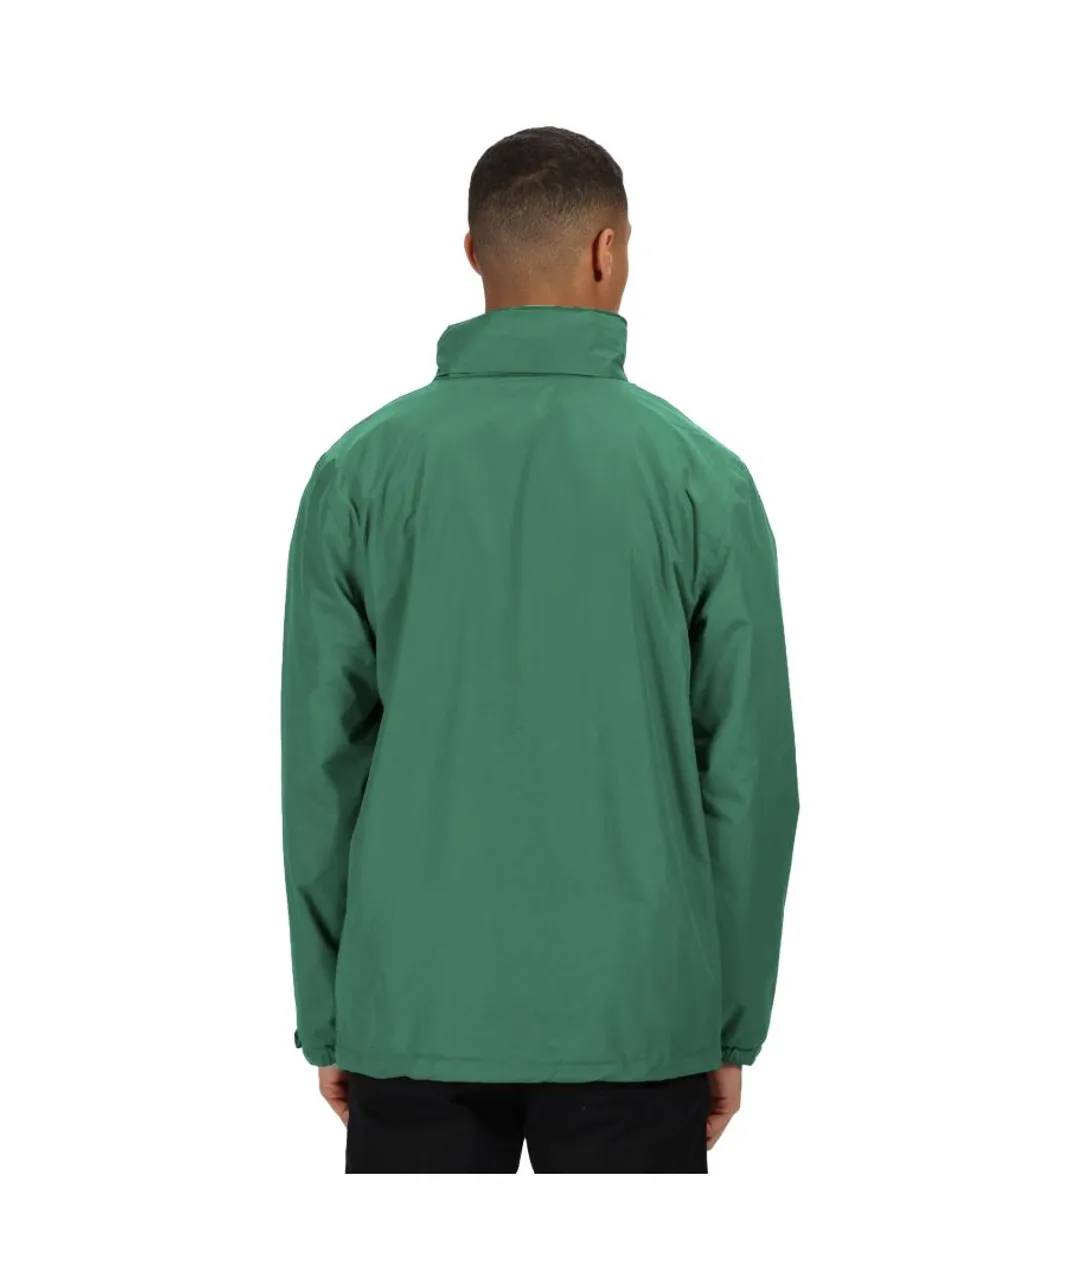 Regatta Mens Standout Ardmore Jacket (Waterproof & Windproof) - Green